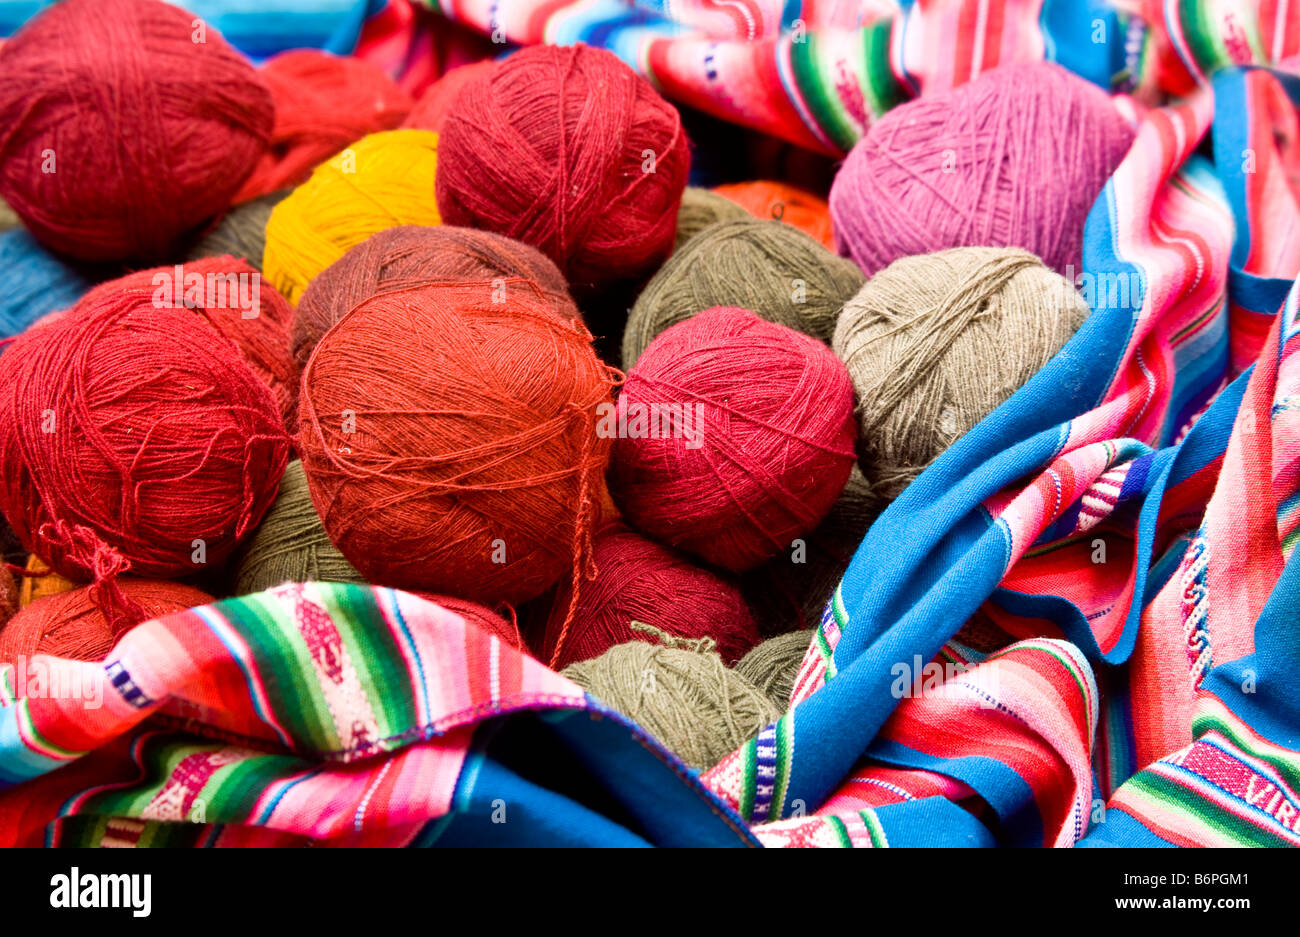 Colourful balls of naturally dyed llama or alpaca wool at Chinchero market Peru South America Stock Photo